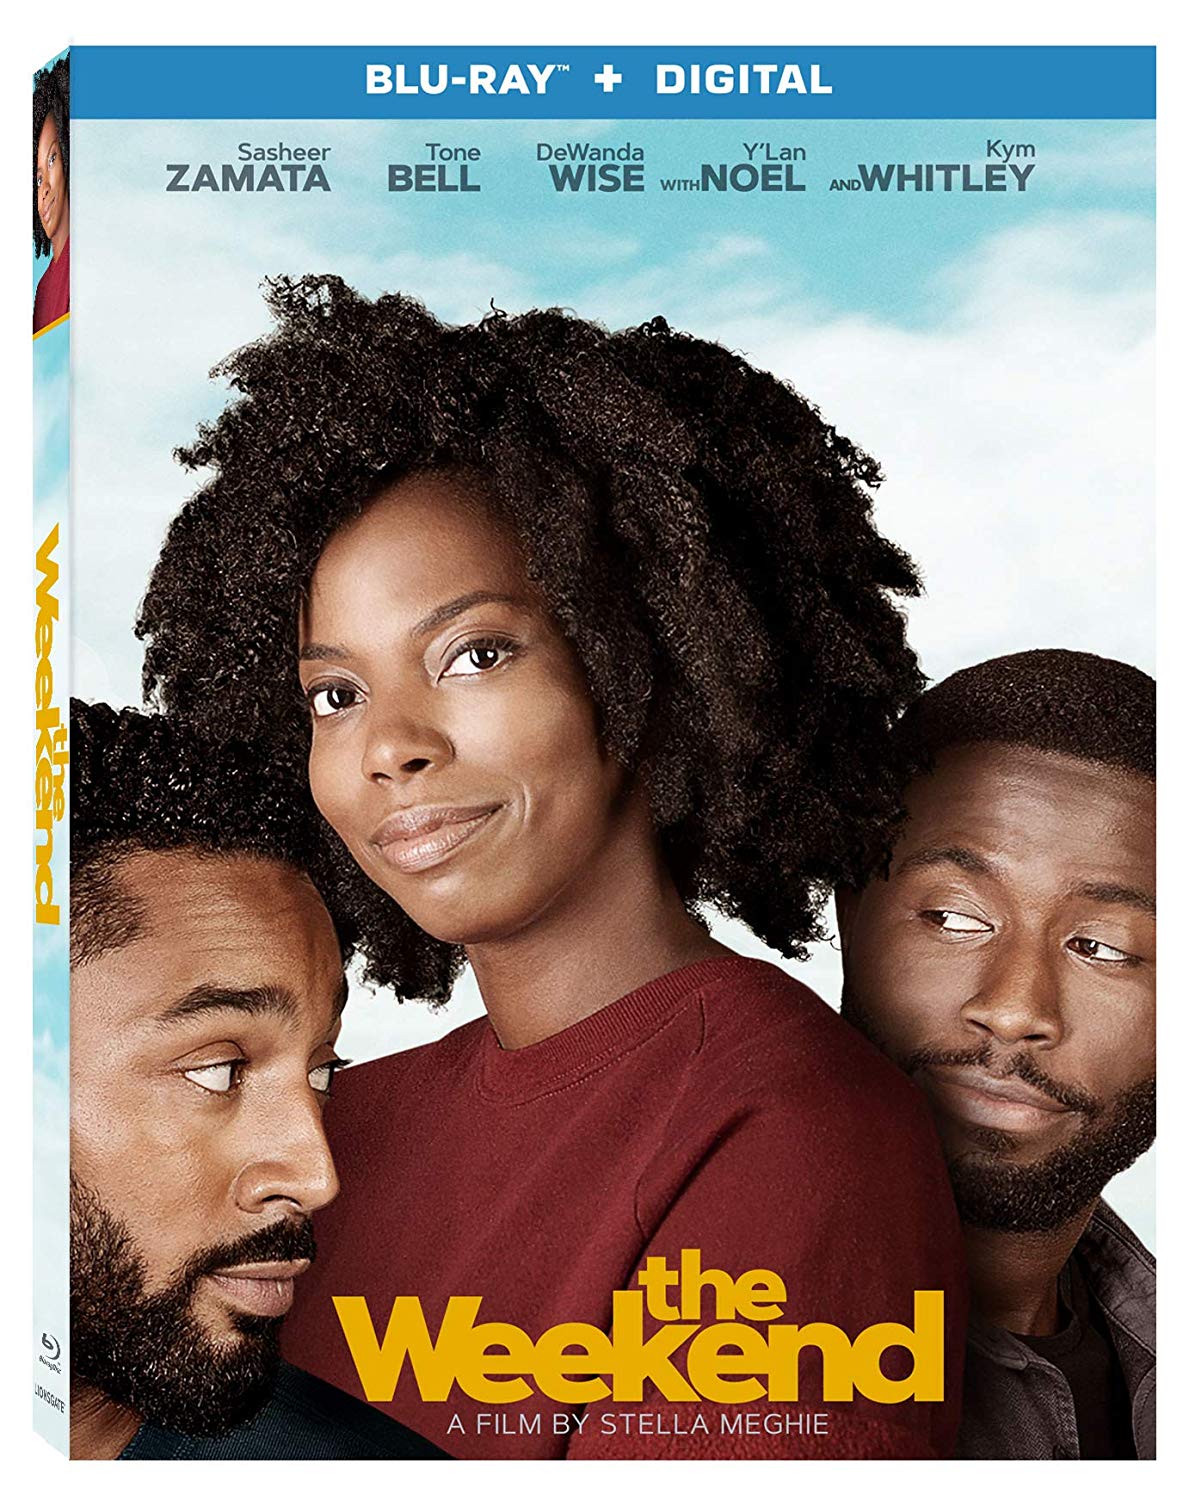 DVD & Blu-ray: THE WEEKEND (2018) Starring Sasheer Zamata and Tone Bell ...